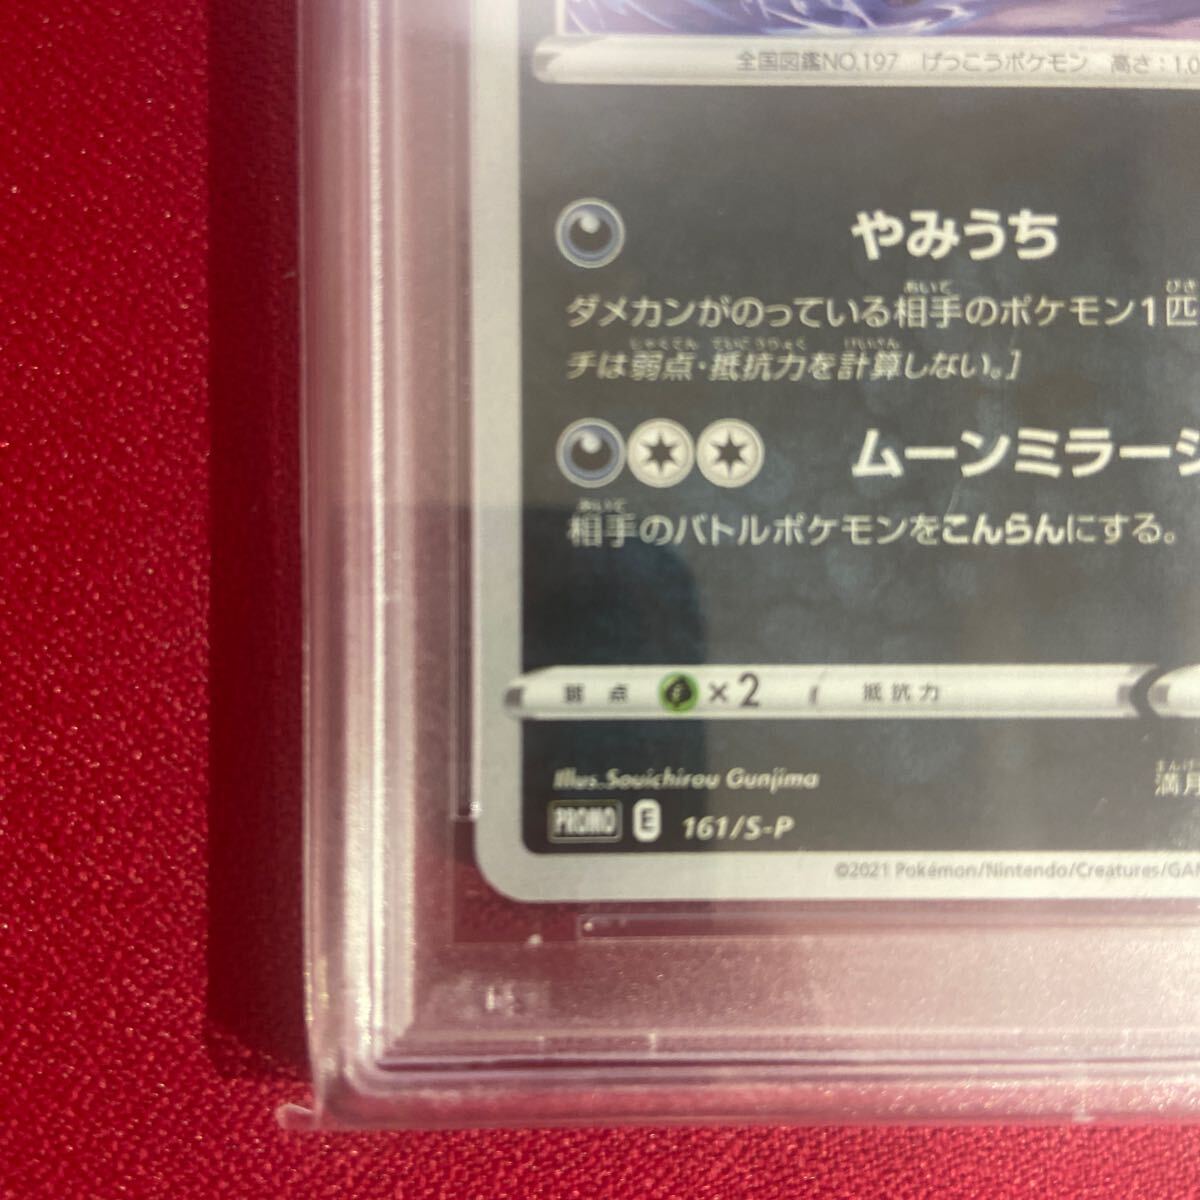 PSA9 ブラッキー　161/S-P Umbreon 161/S-P 2021 Pokemon Card Japanese Gym Promo PSA 9 Mint_画像5